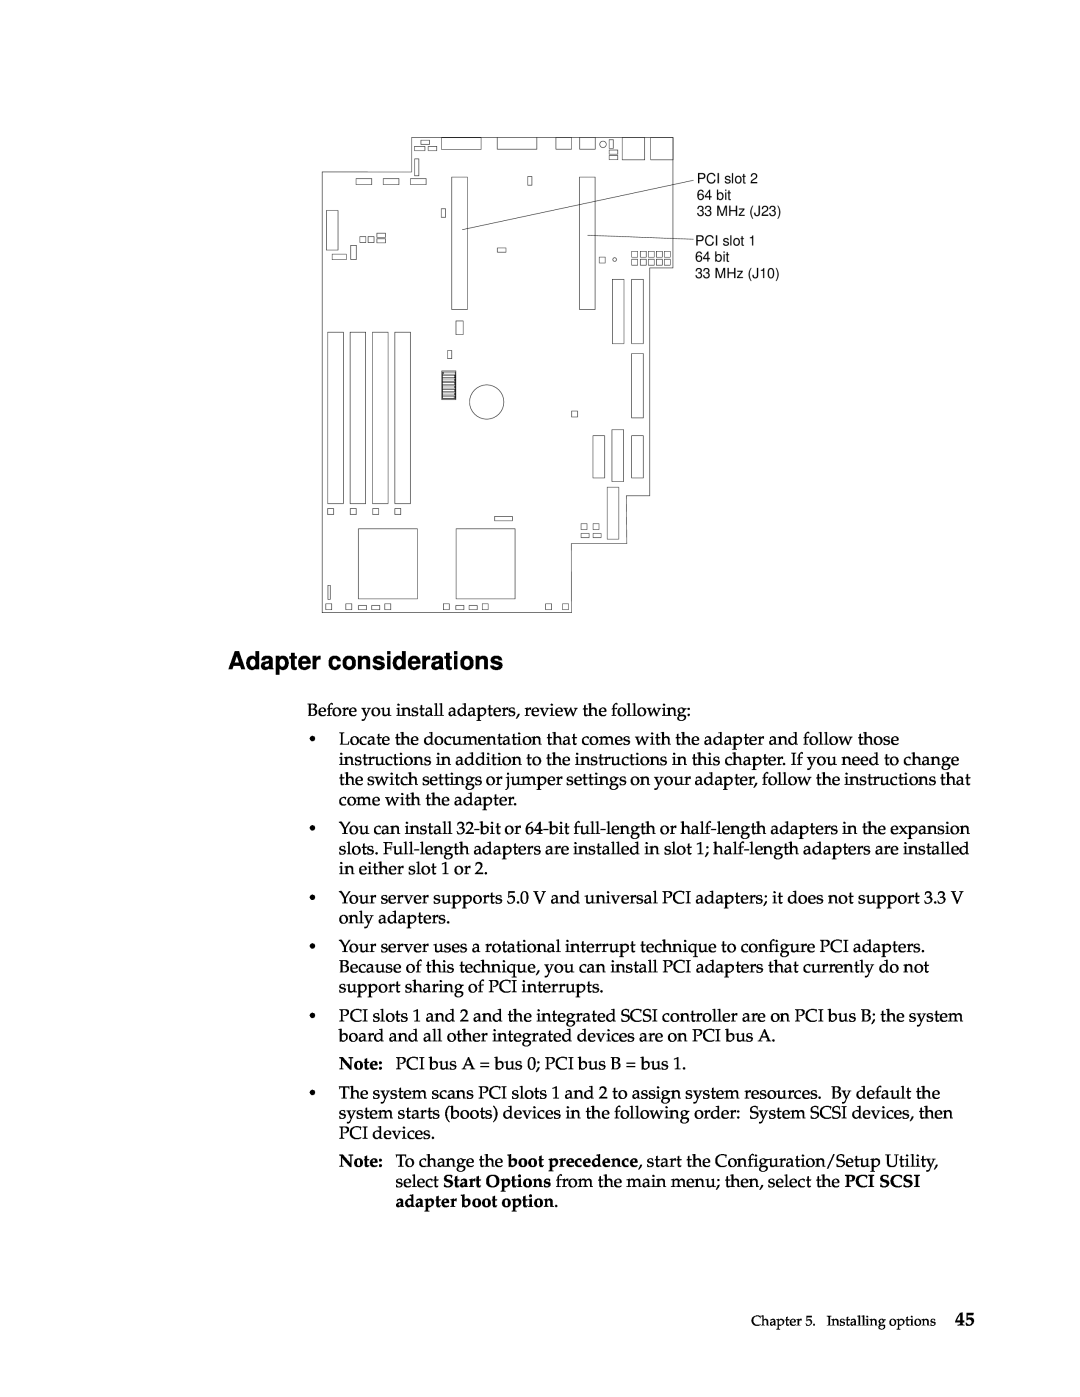 IBM xSeries 330 manual Adapter considerations 